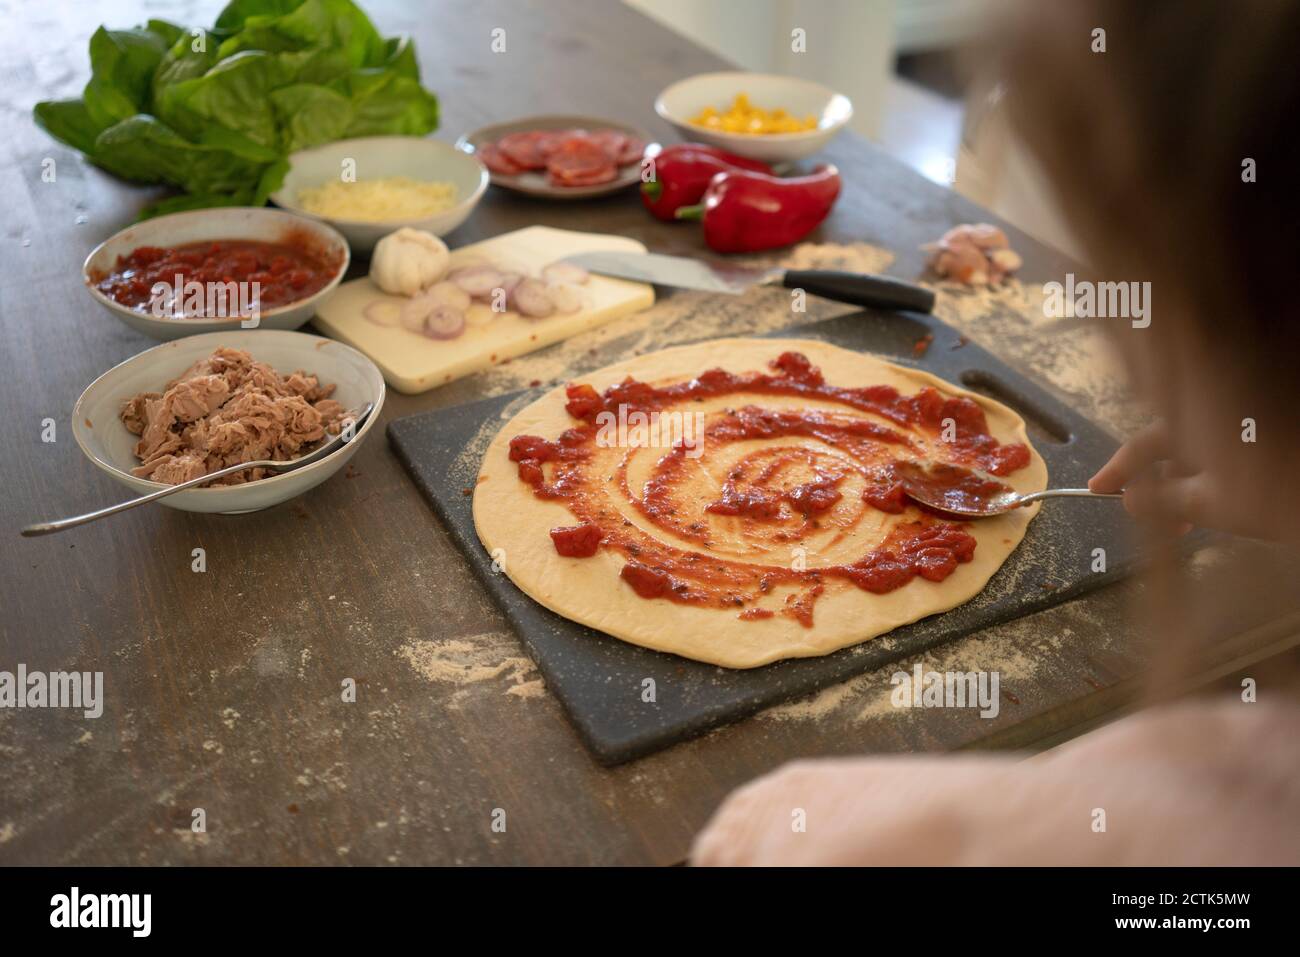 Girl spreading sauce over dough while preparing pizza on kitchen island Stock Photo